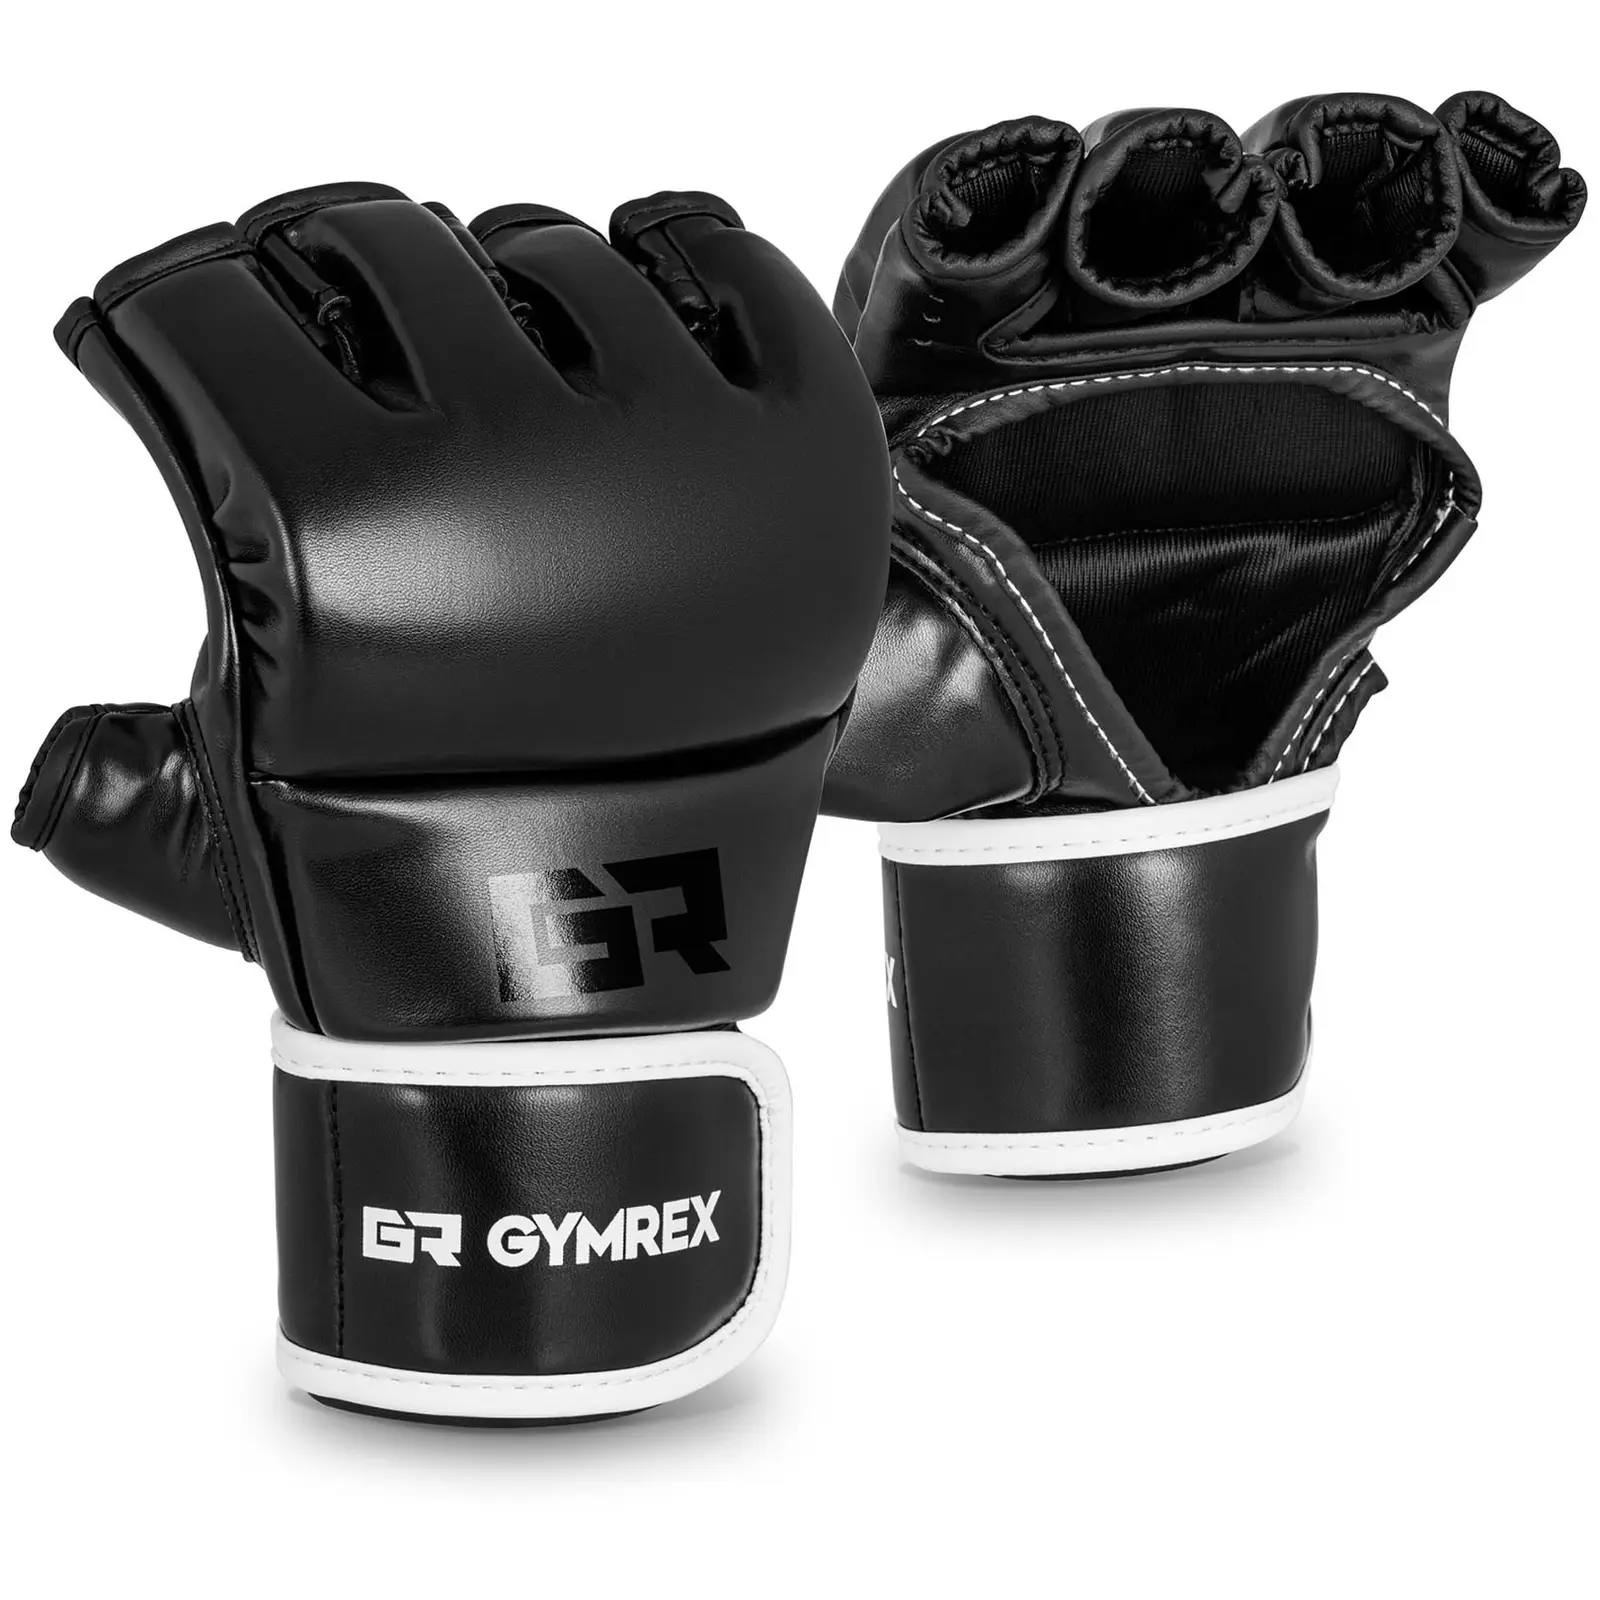 MMA Gloves - size L/XL - black